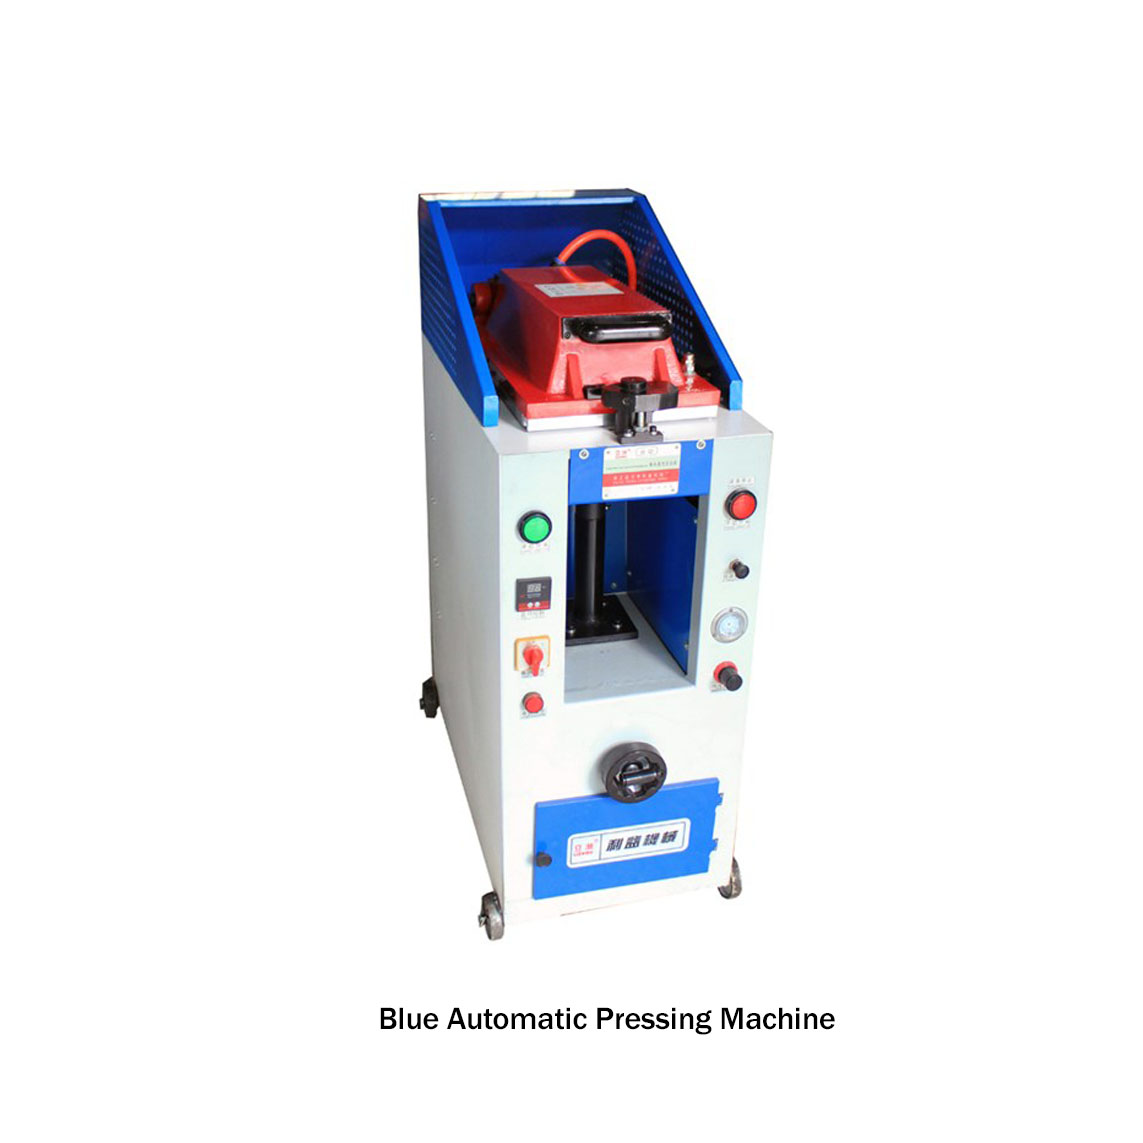 Blue Automatic Pressing Machine